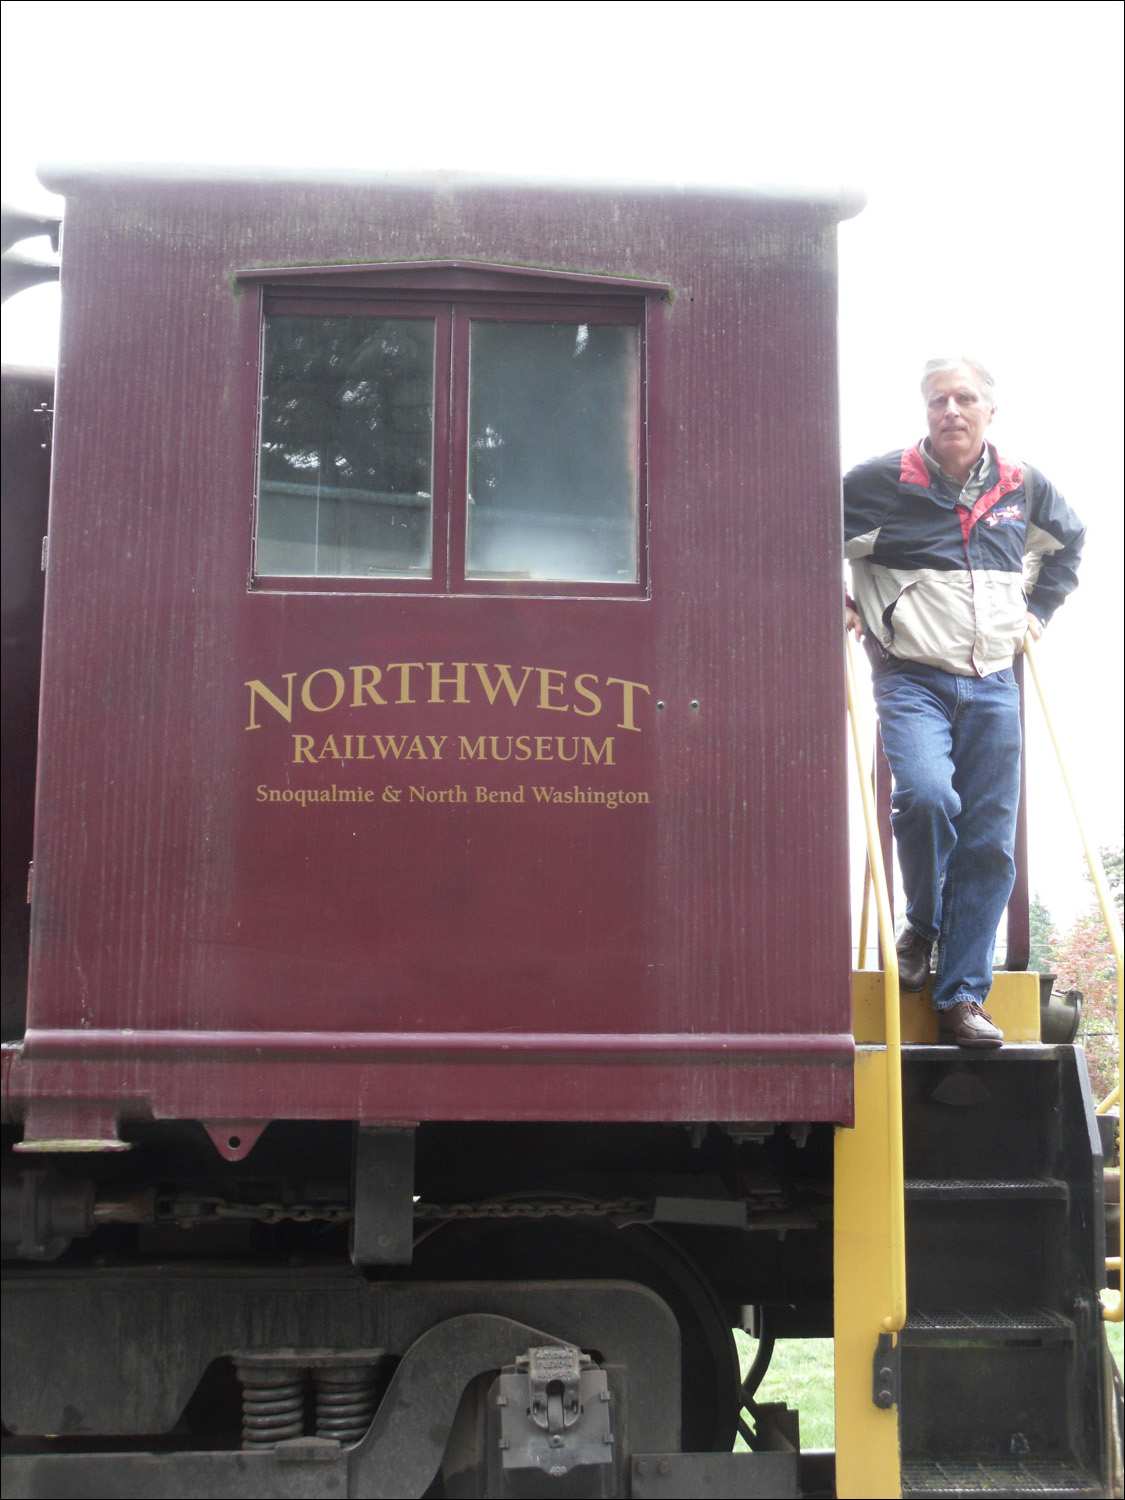 Snoqualmie, WA- Photos from the Northwest Railway Museum